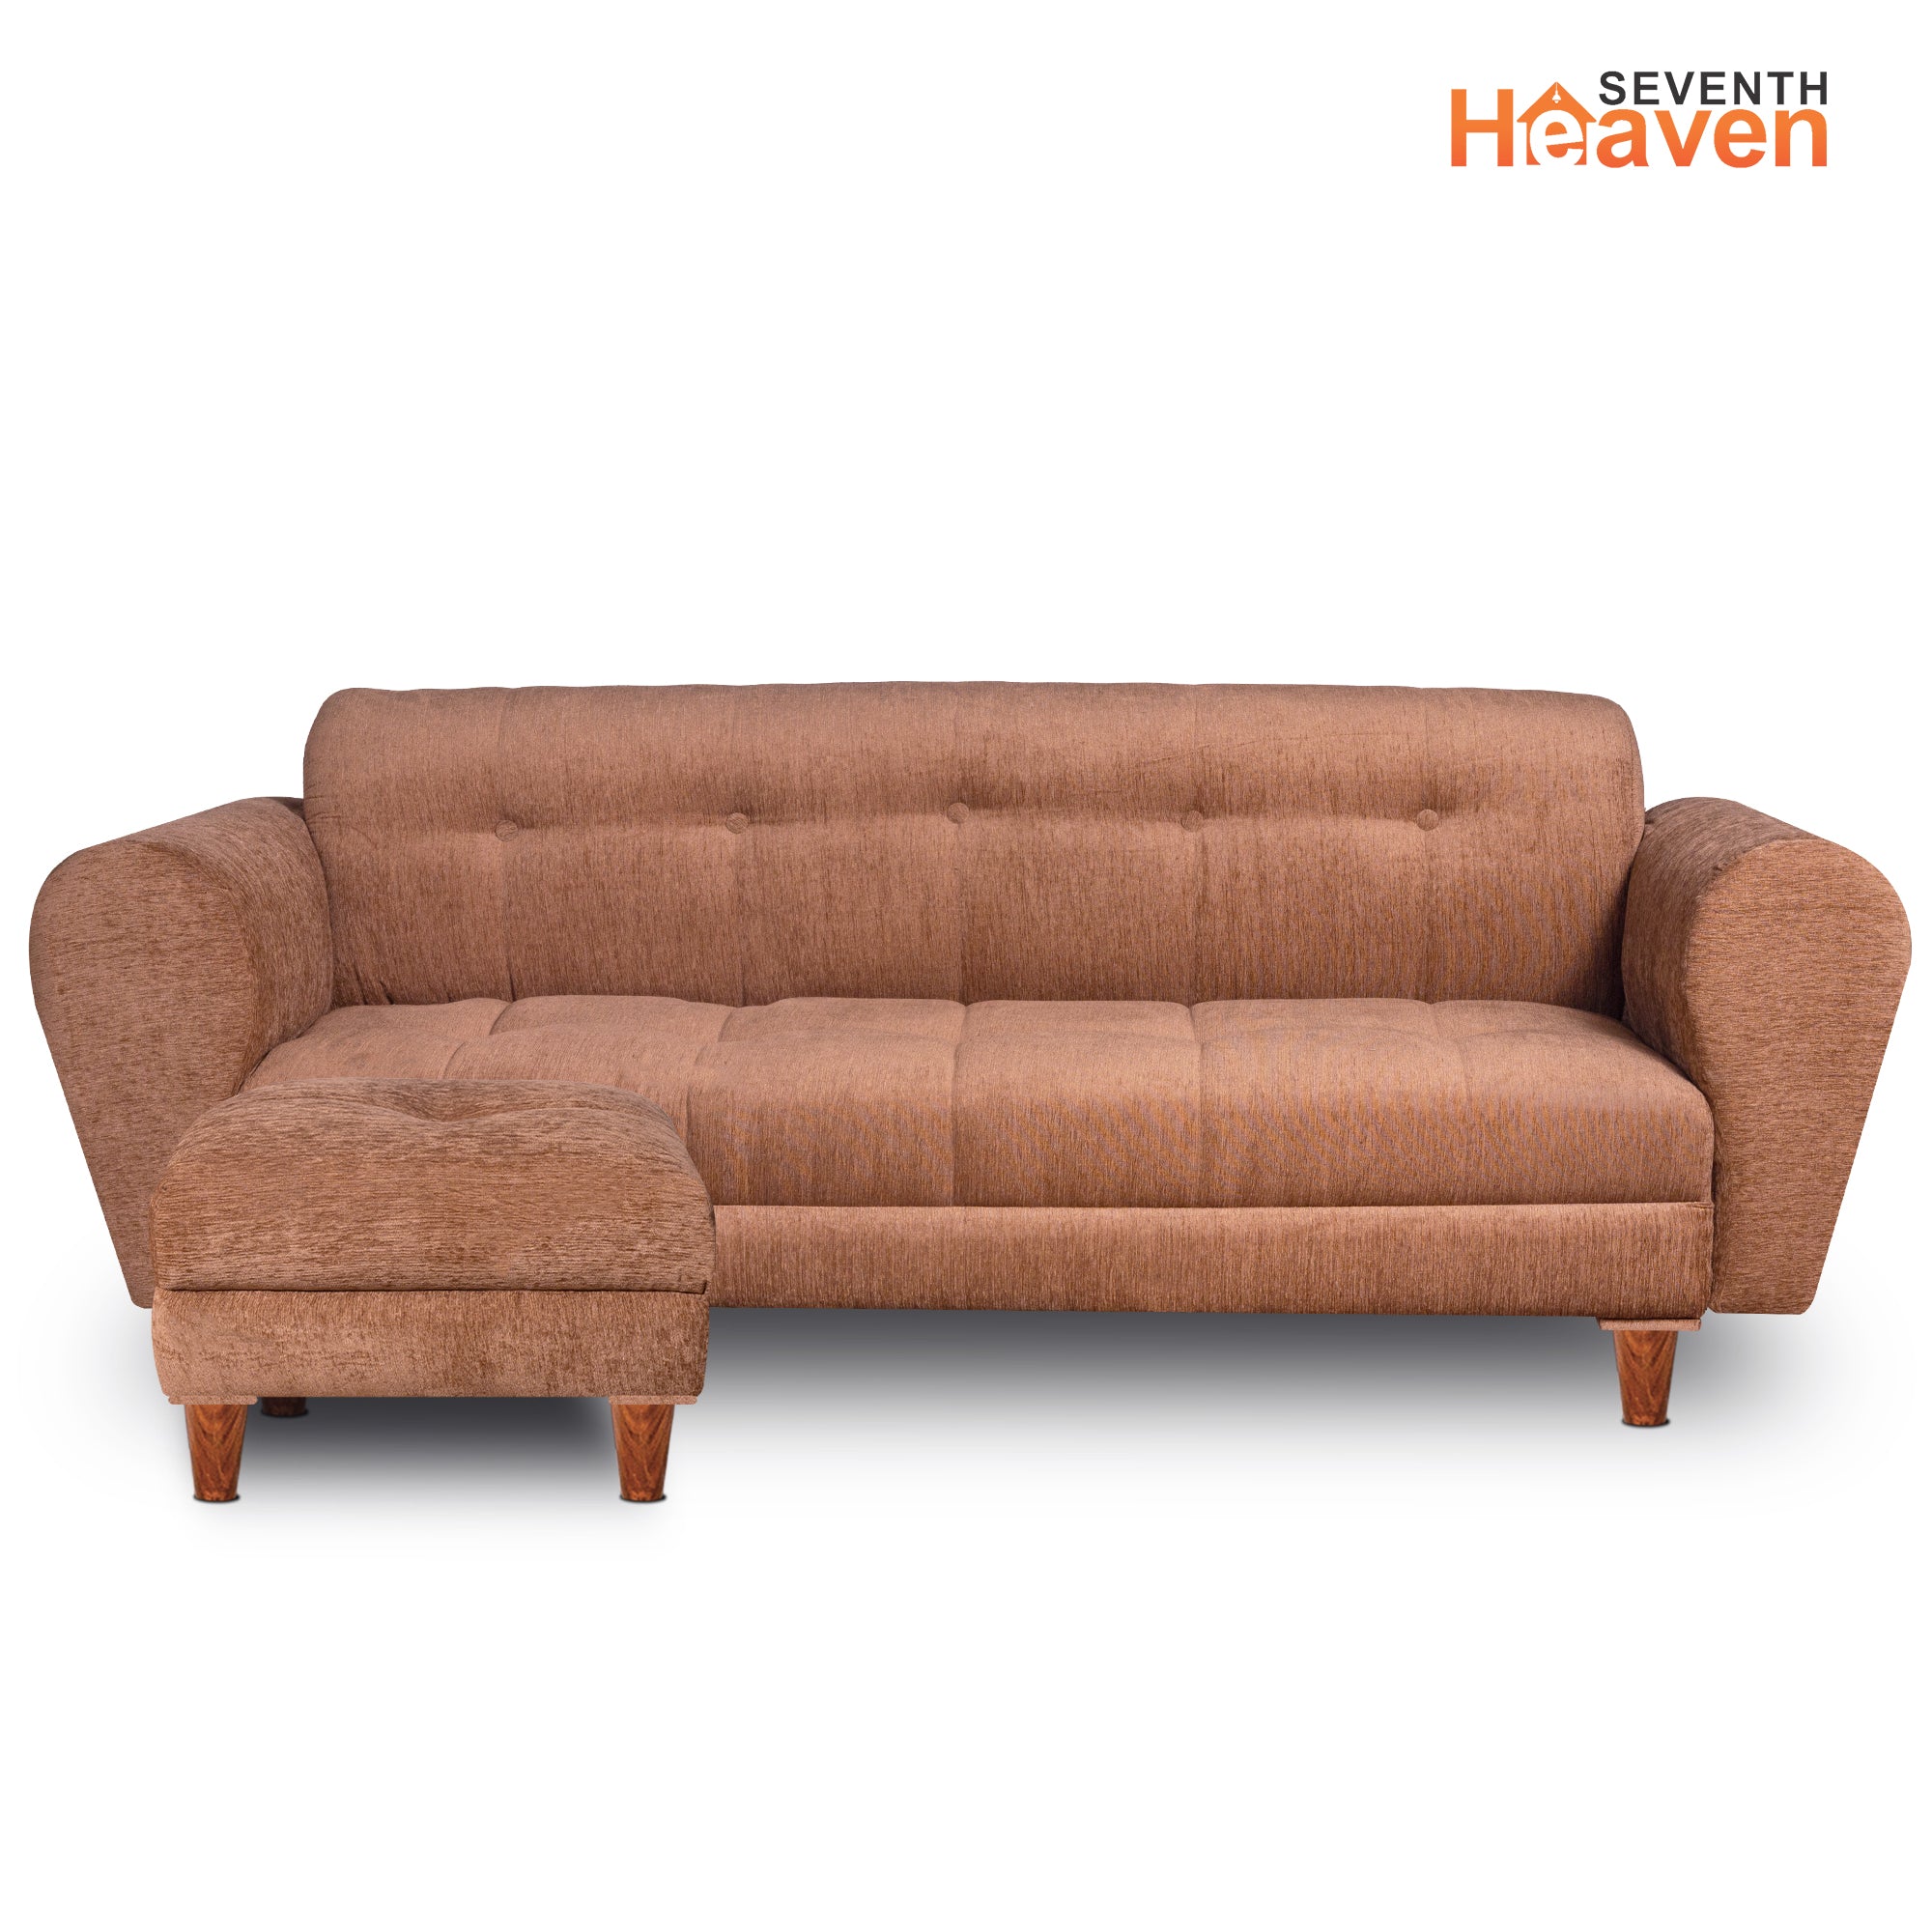 Seventh Heaven Milan 4 Seater Sofa with Ottoman, Chenille Molfino Fabric: 3 Year Warranty Fabric 4 Seater Sofa  (Finish Color - Beige, DIY(Do-It-Yourself))